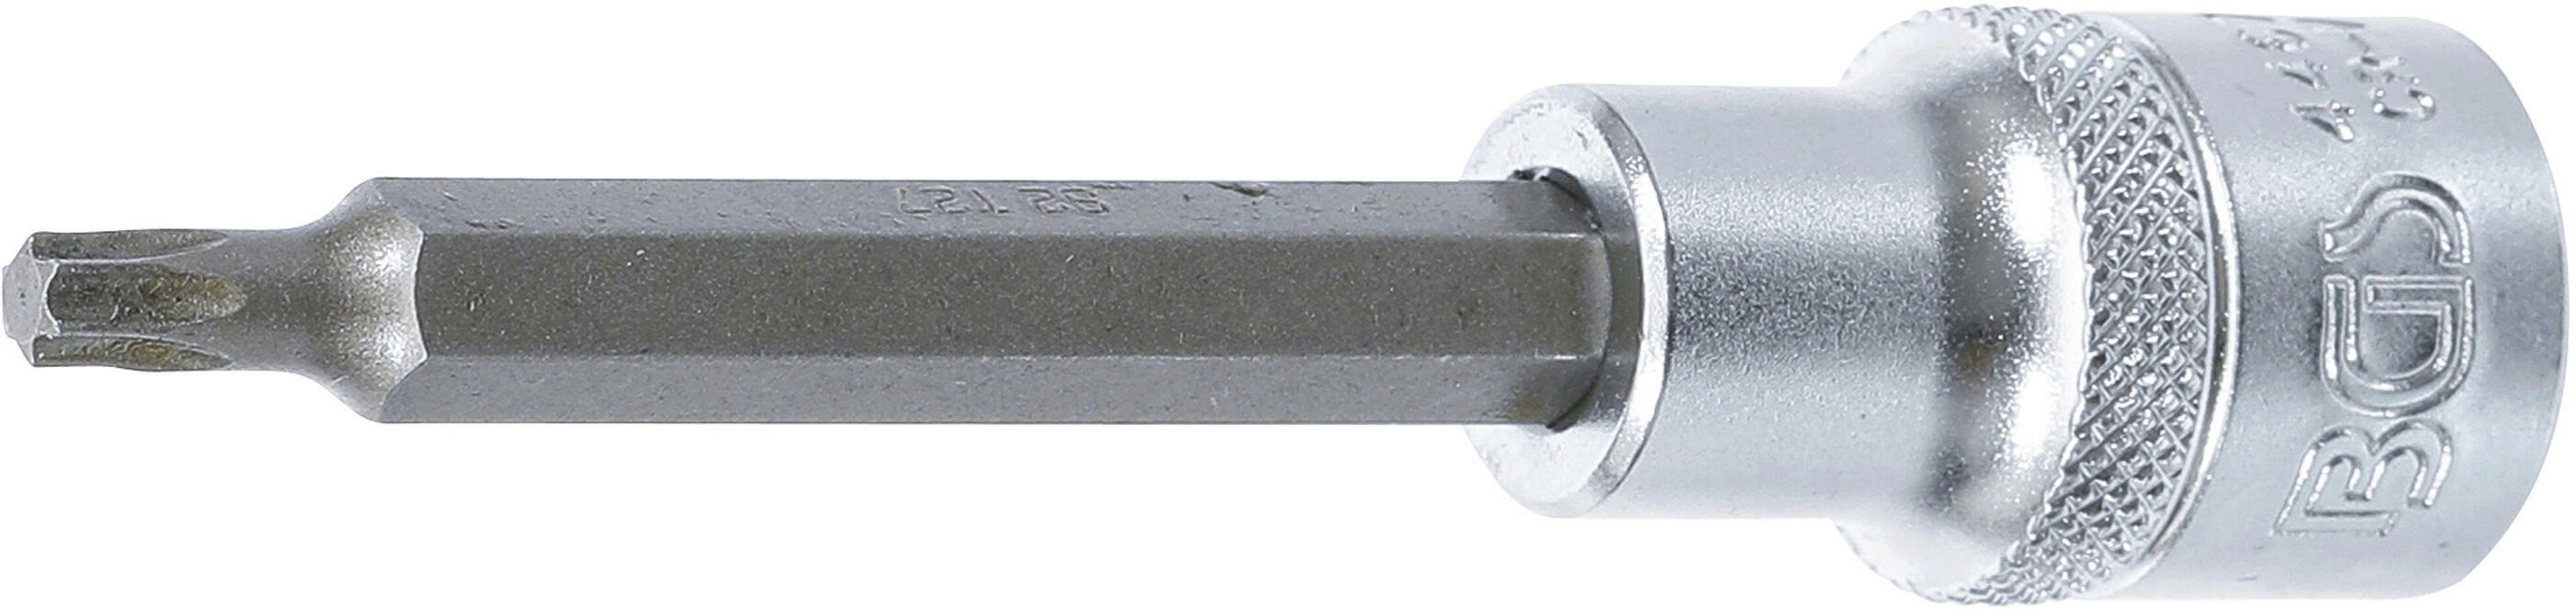 Bit-Einsatz | Länge 100 mm | Antrieb Innenvierkant 12,5 mm (1/2") | T-Profil (für Torx) T27